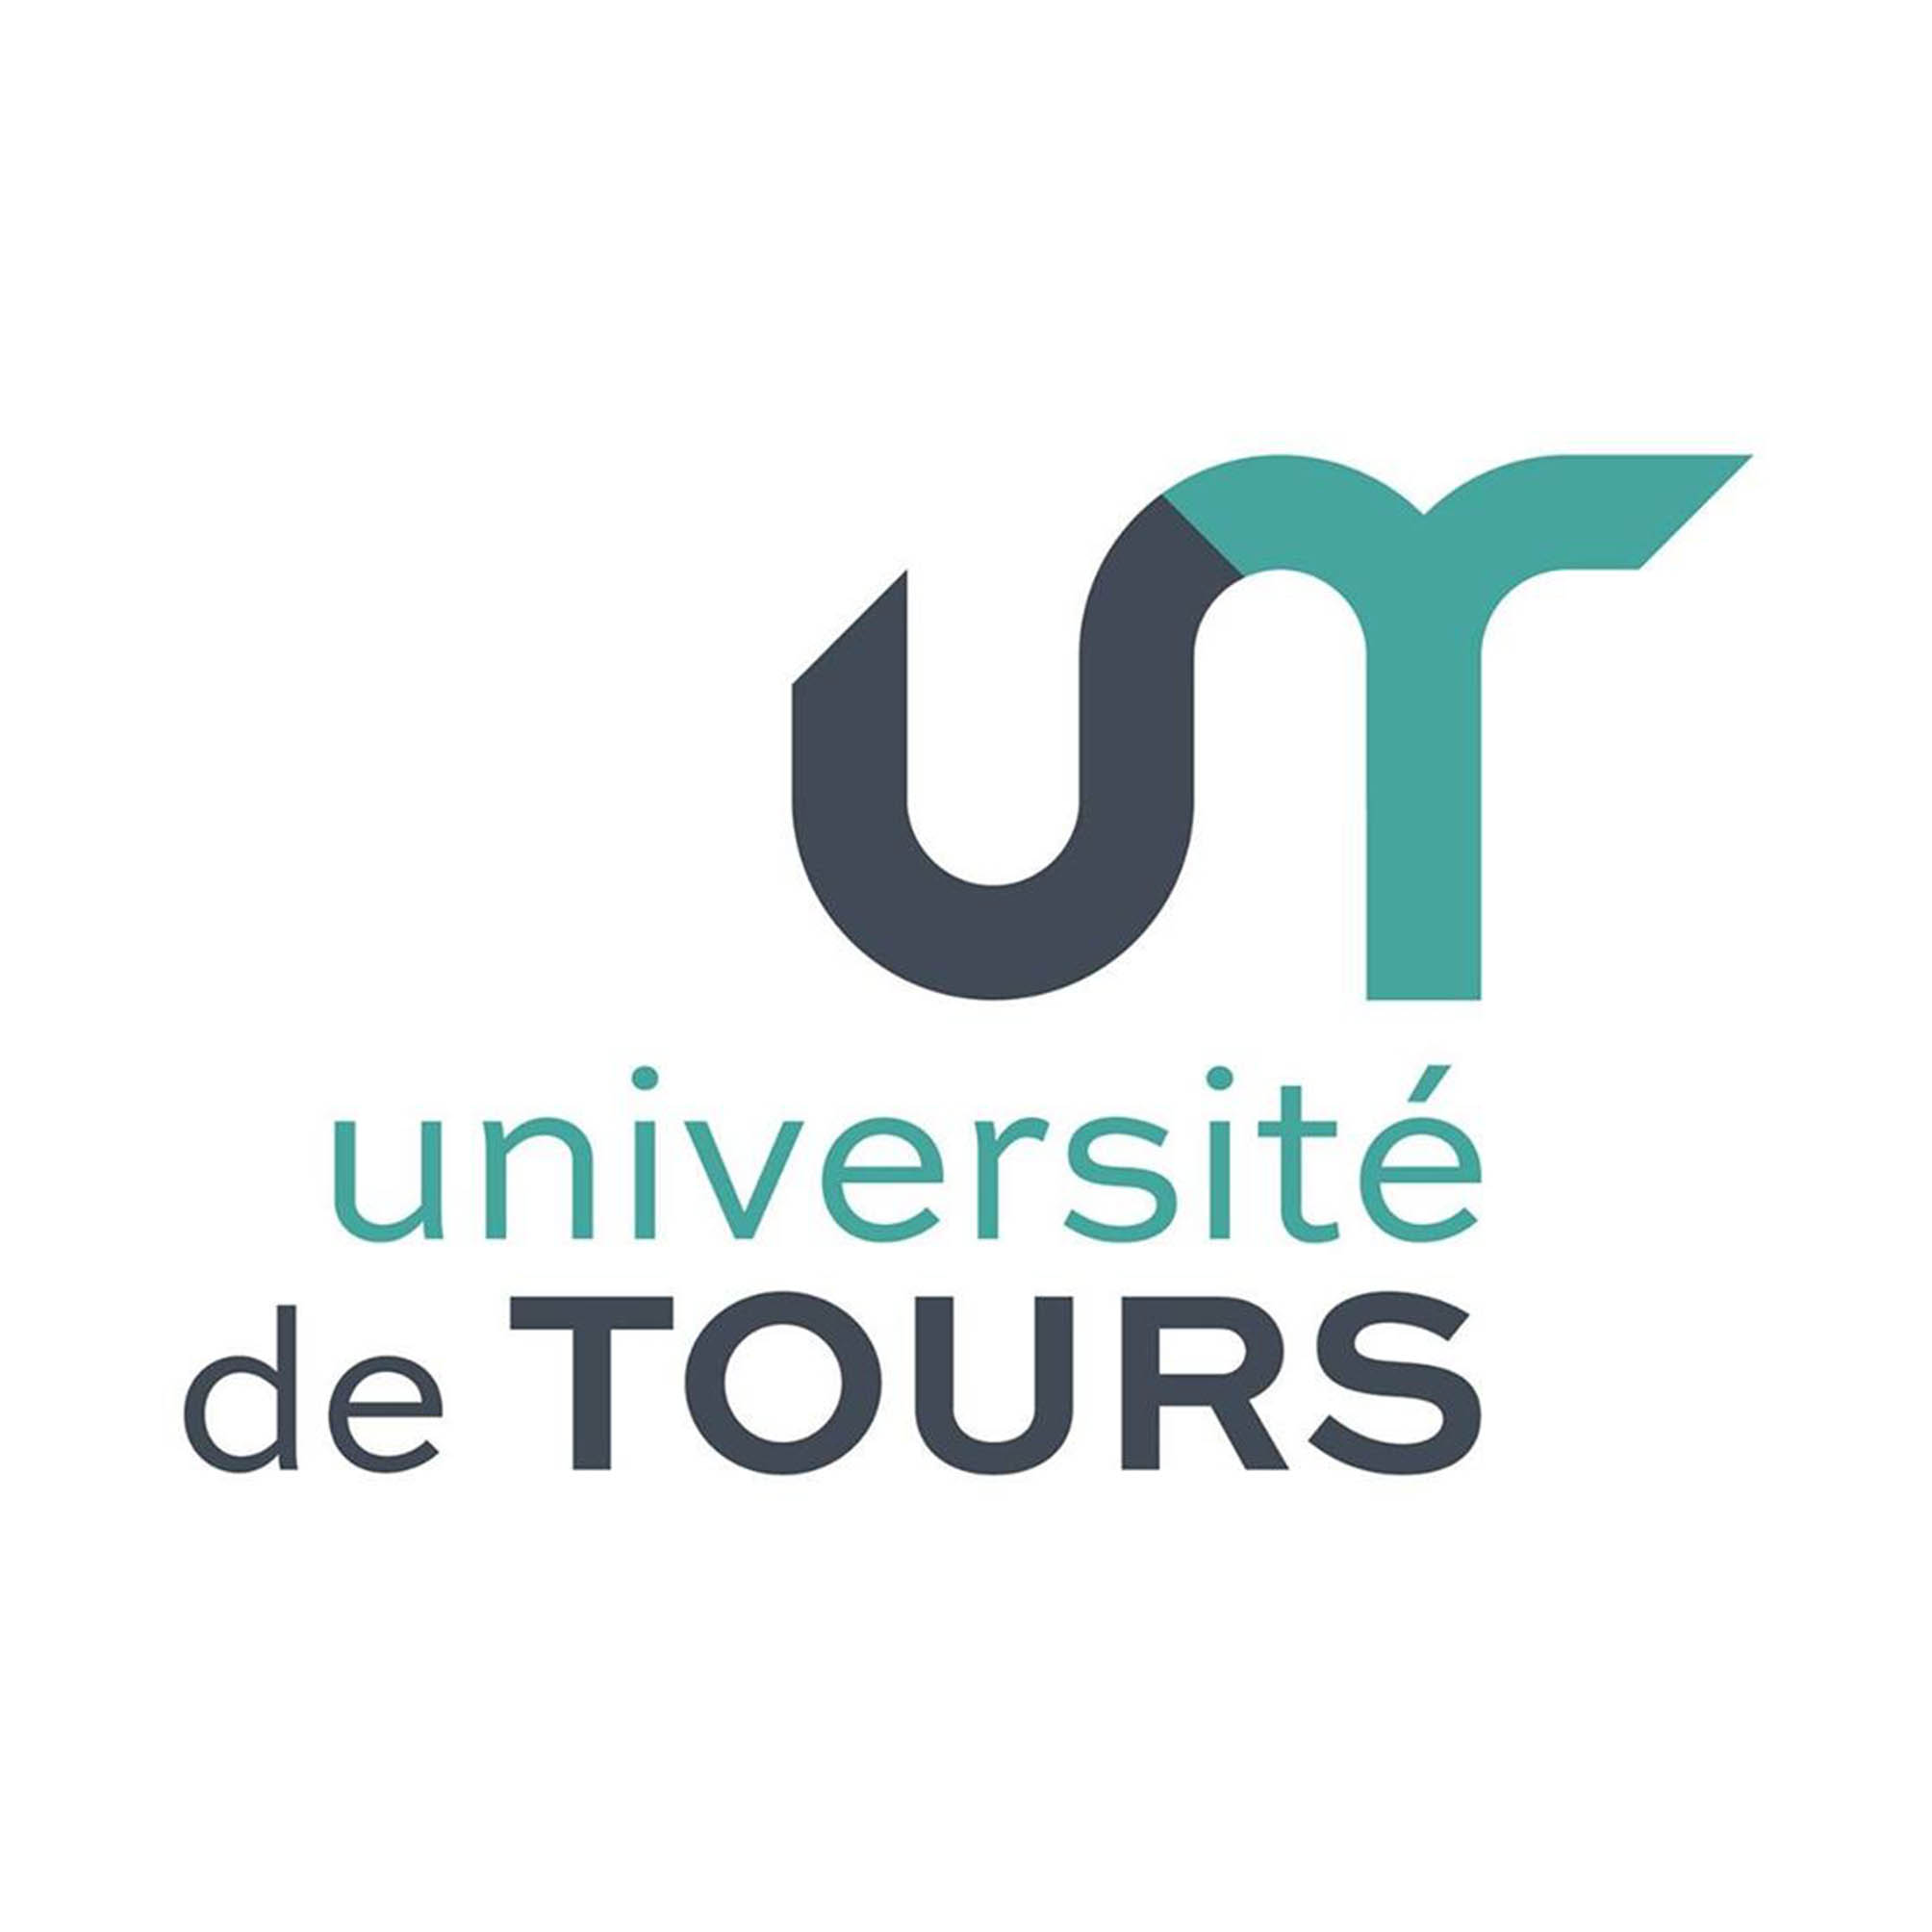 Univ Tours